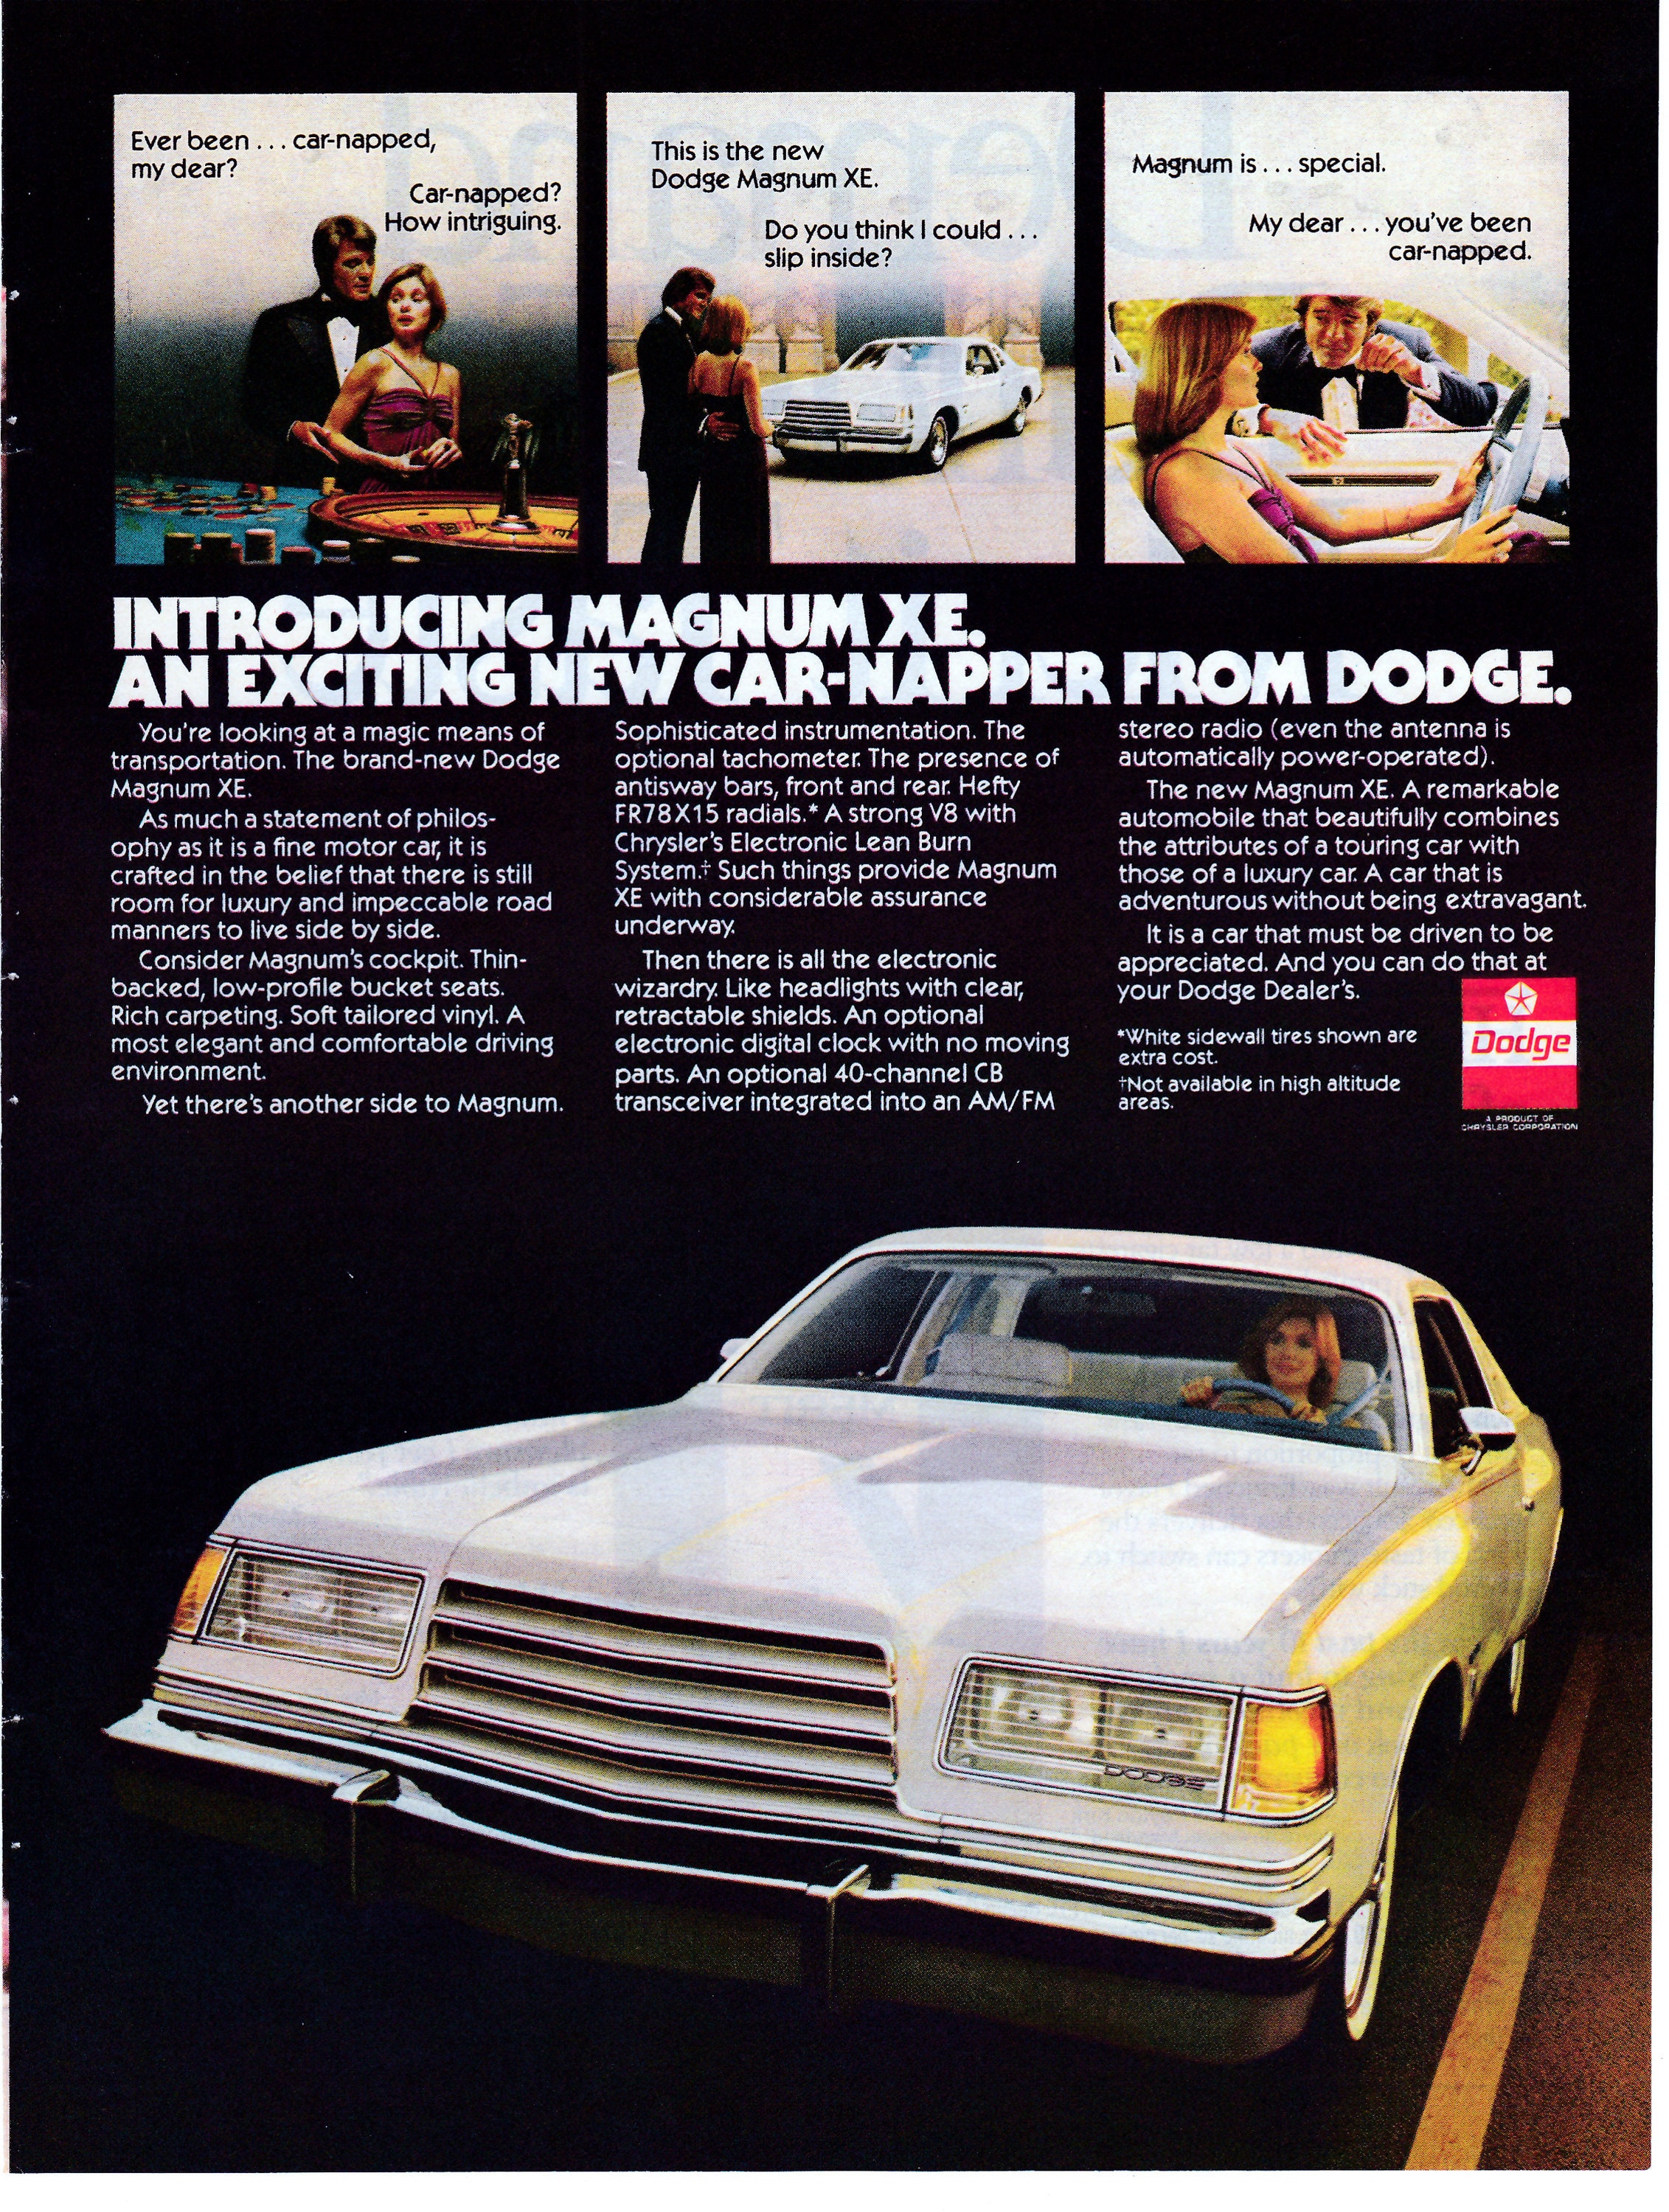 1977 Dodge Magnum Xe Introduction Touring + Luxury-Original Magazine Ad